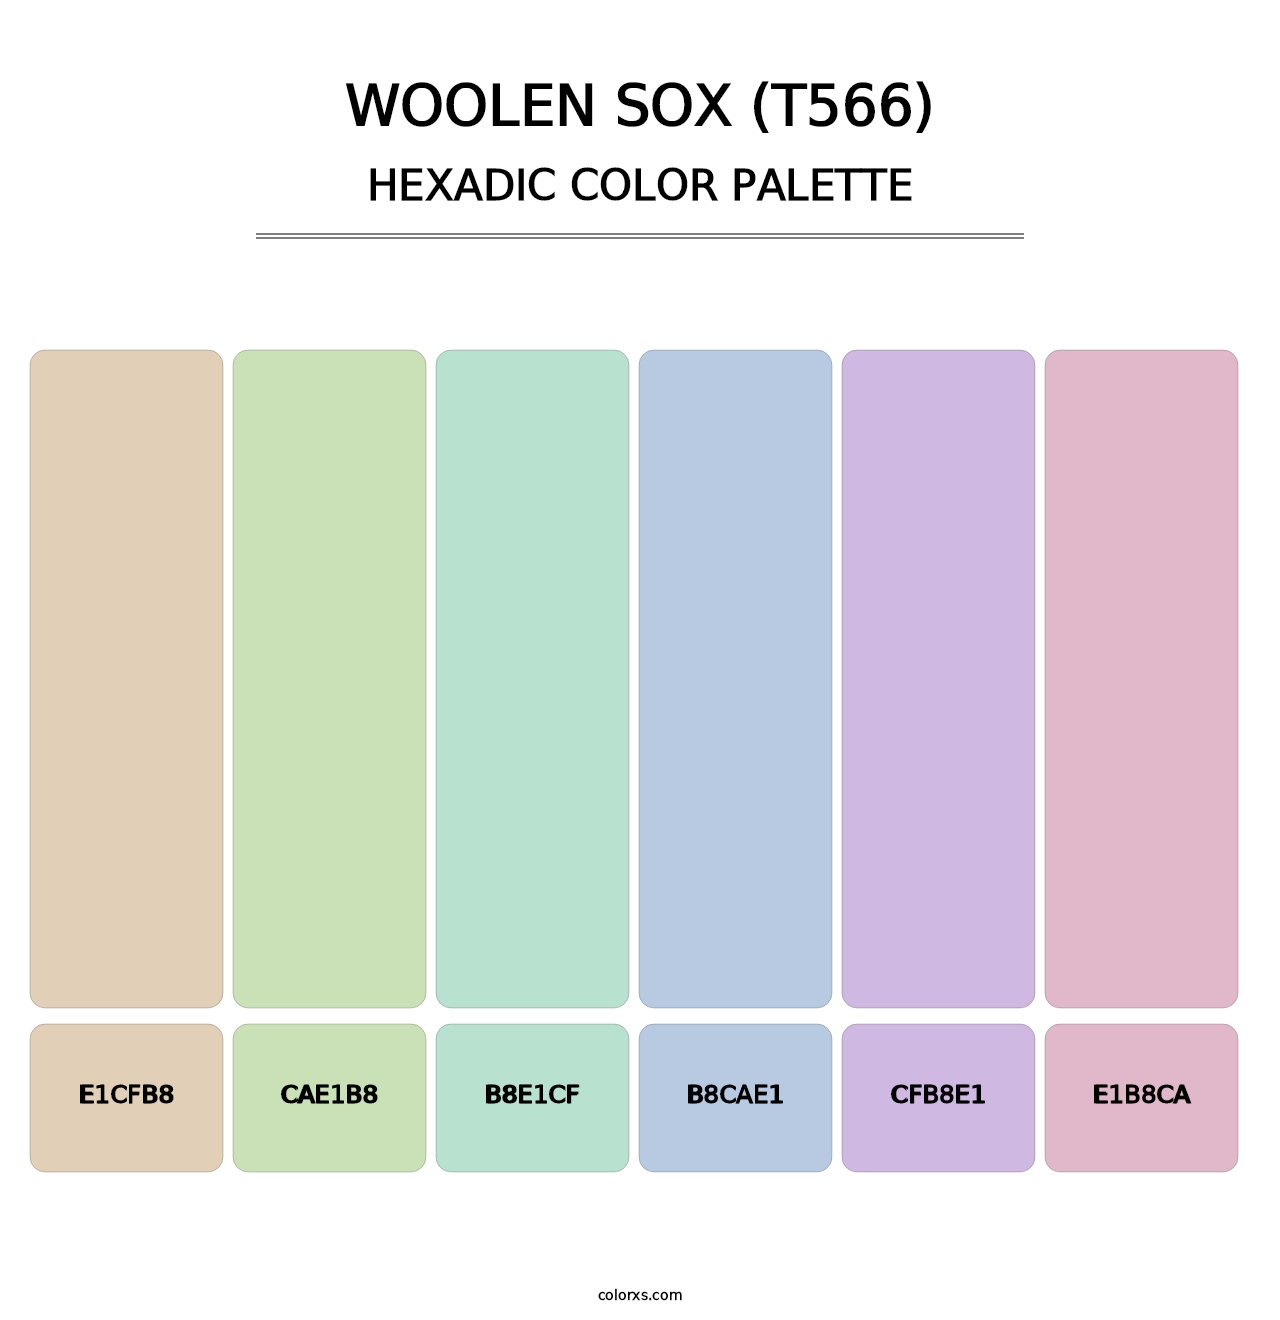 Woolen Sox (T566) - Hexadic Color Palette